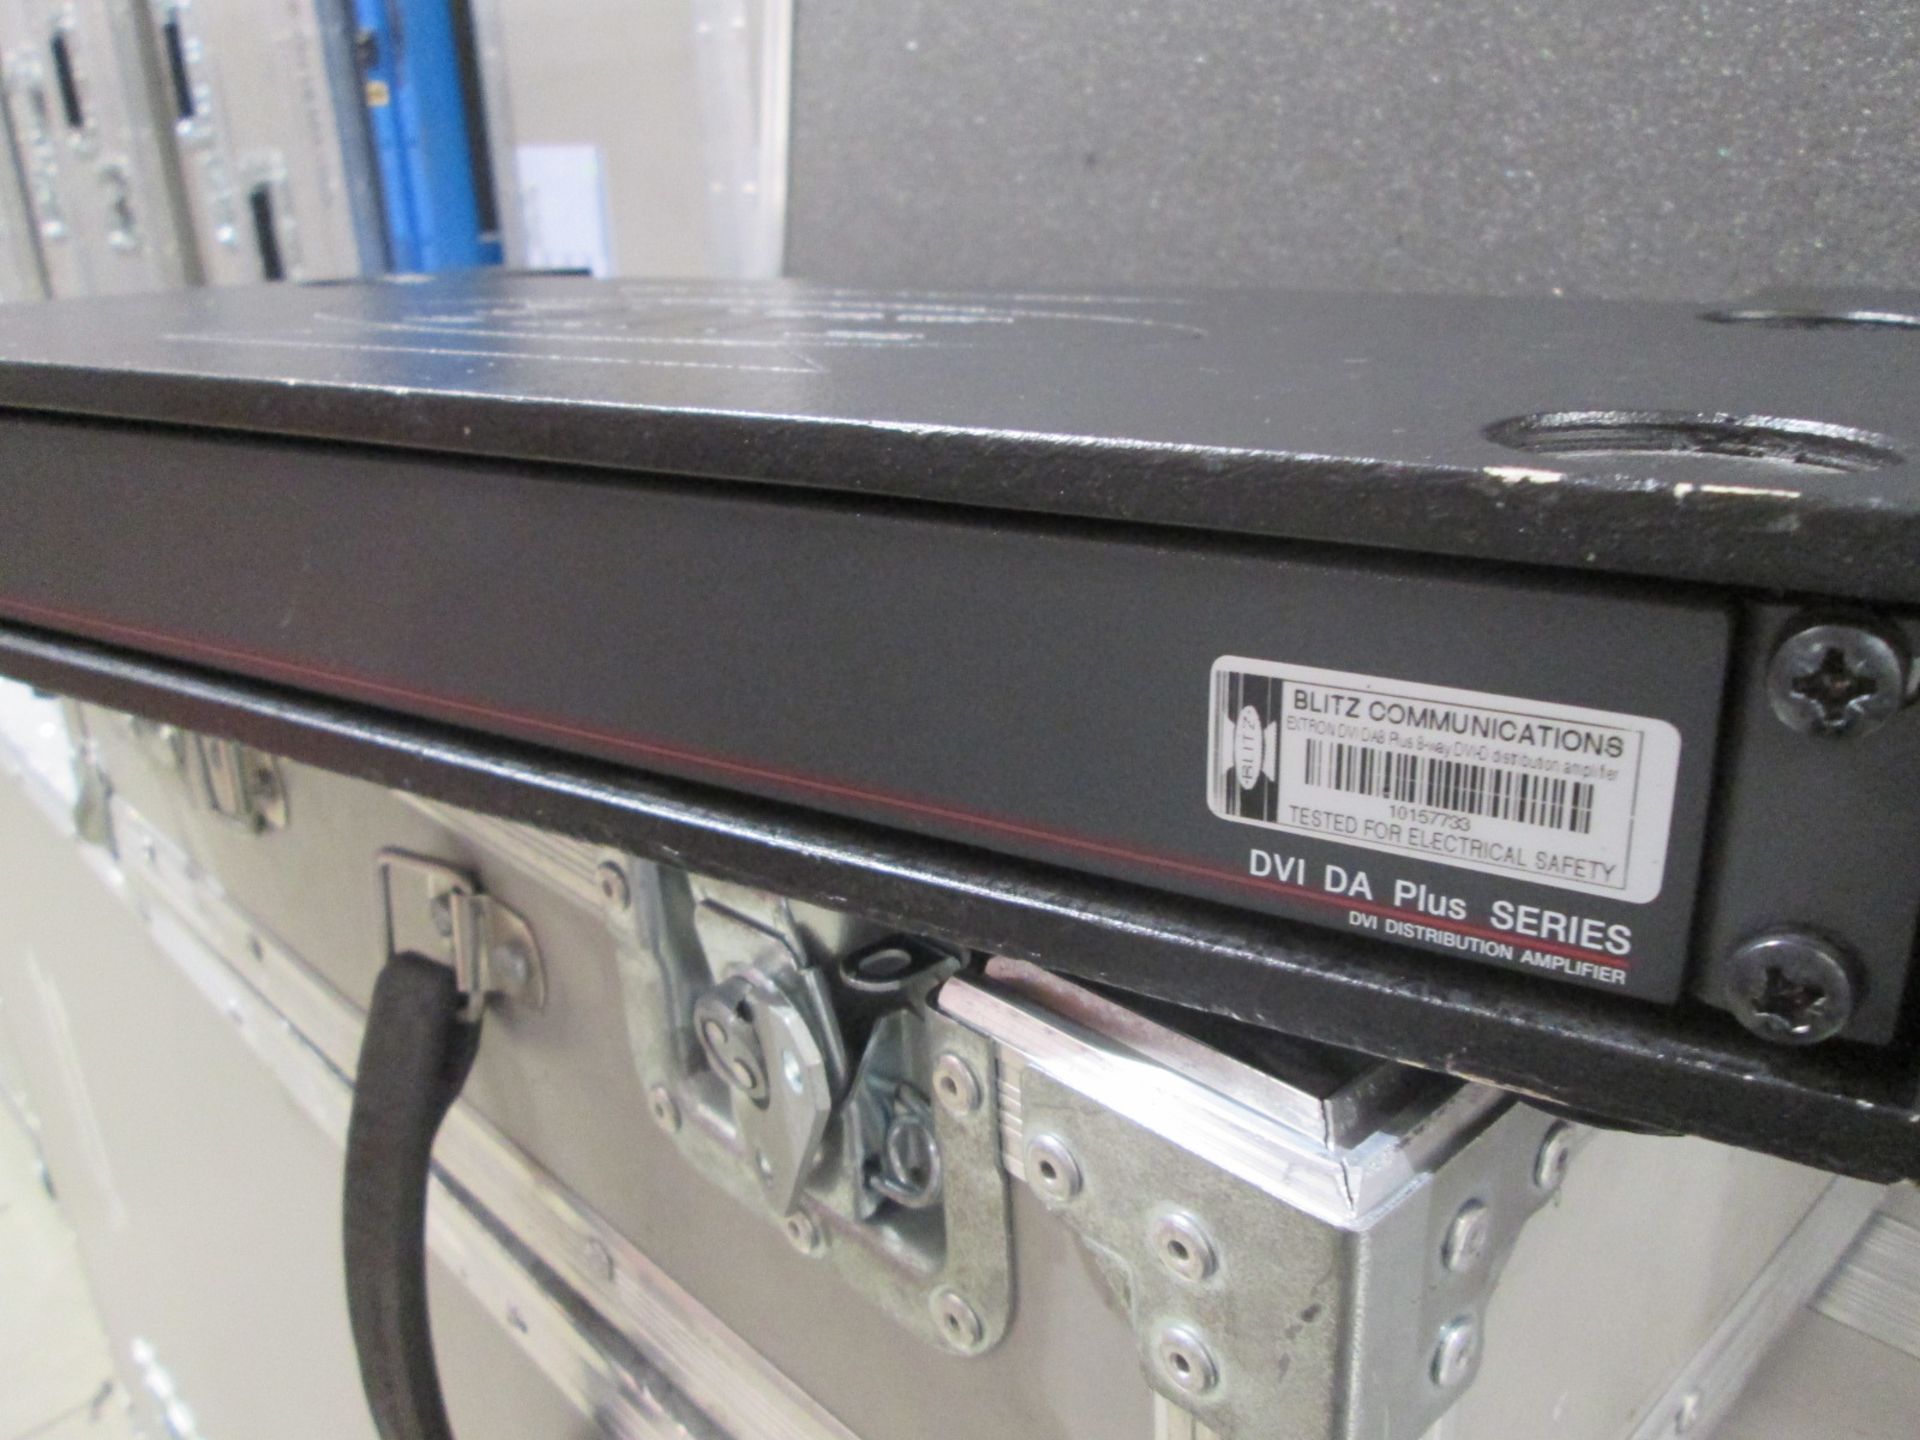 Extron DVI DA8 Plus 1:8 distribution Amplifers, In flight cases (Qty 4) - Image 3 of 5